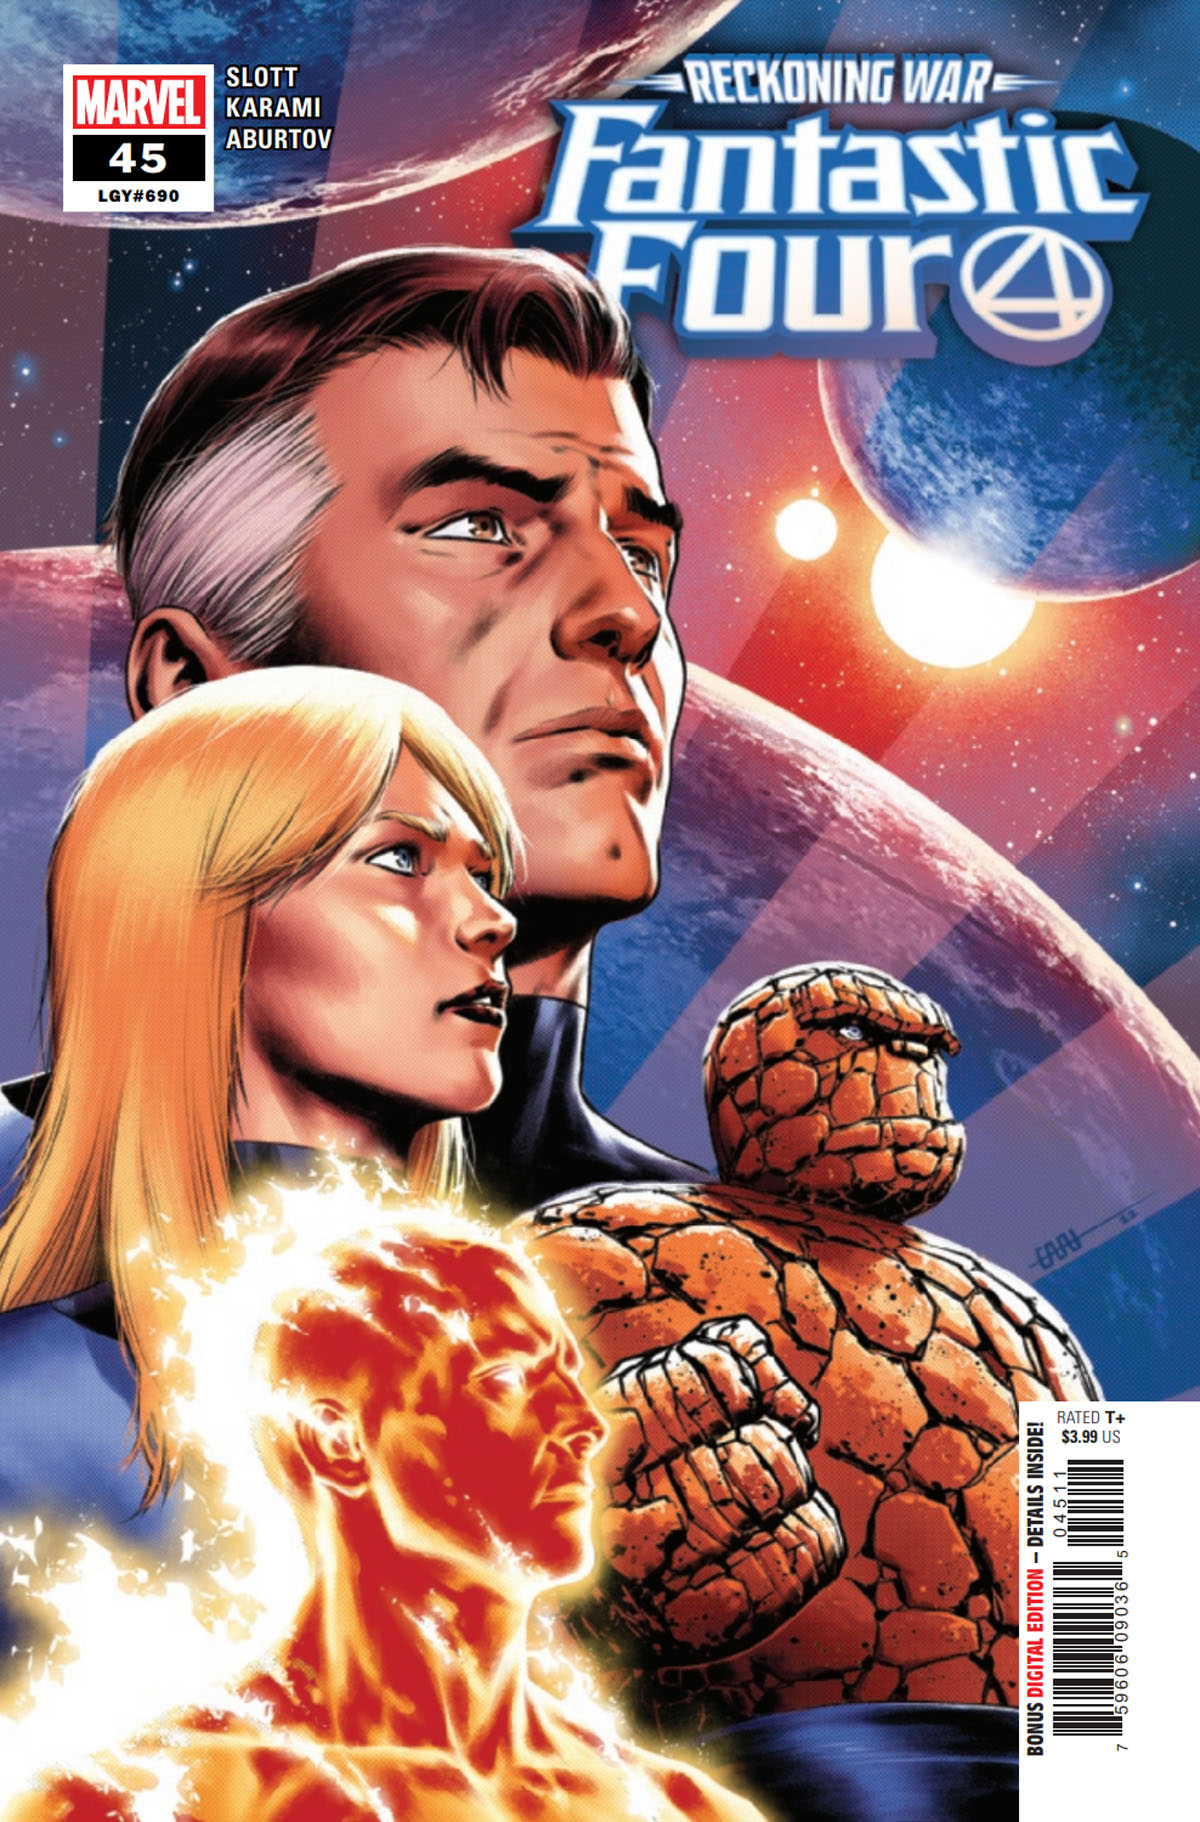 Fantastic Four #45 cover